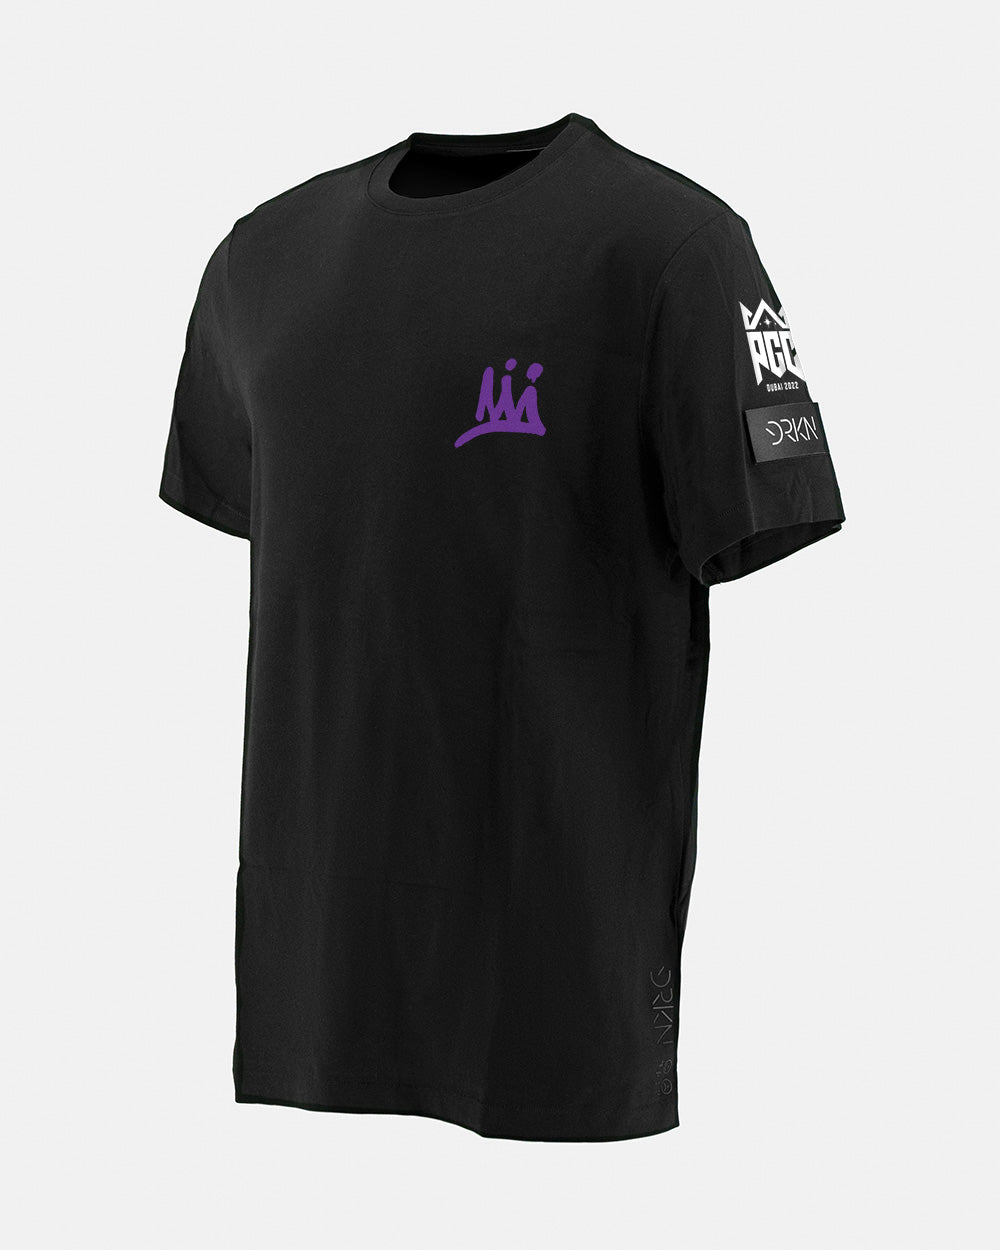 The Official PGC 2022 Black T-Shirt